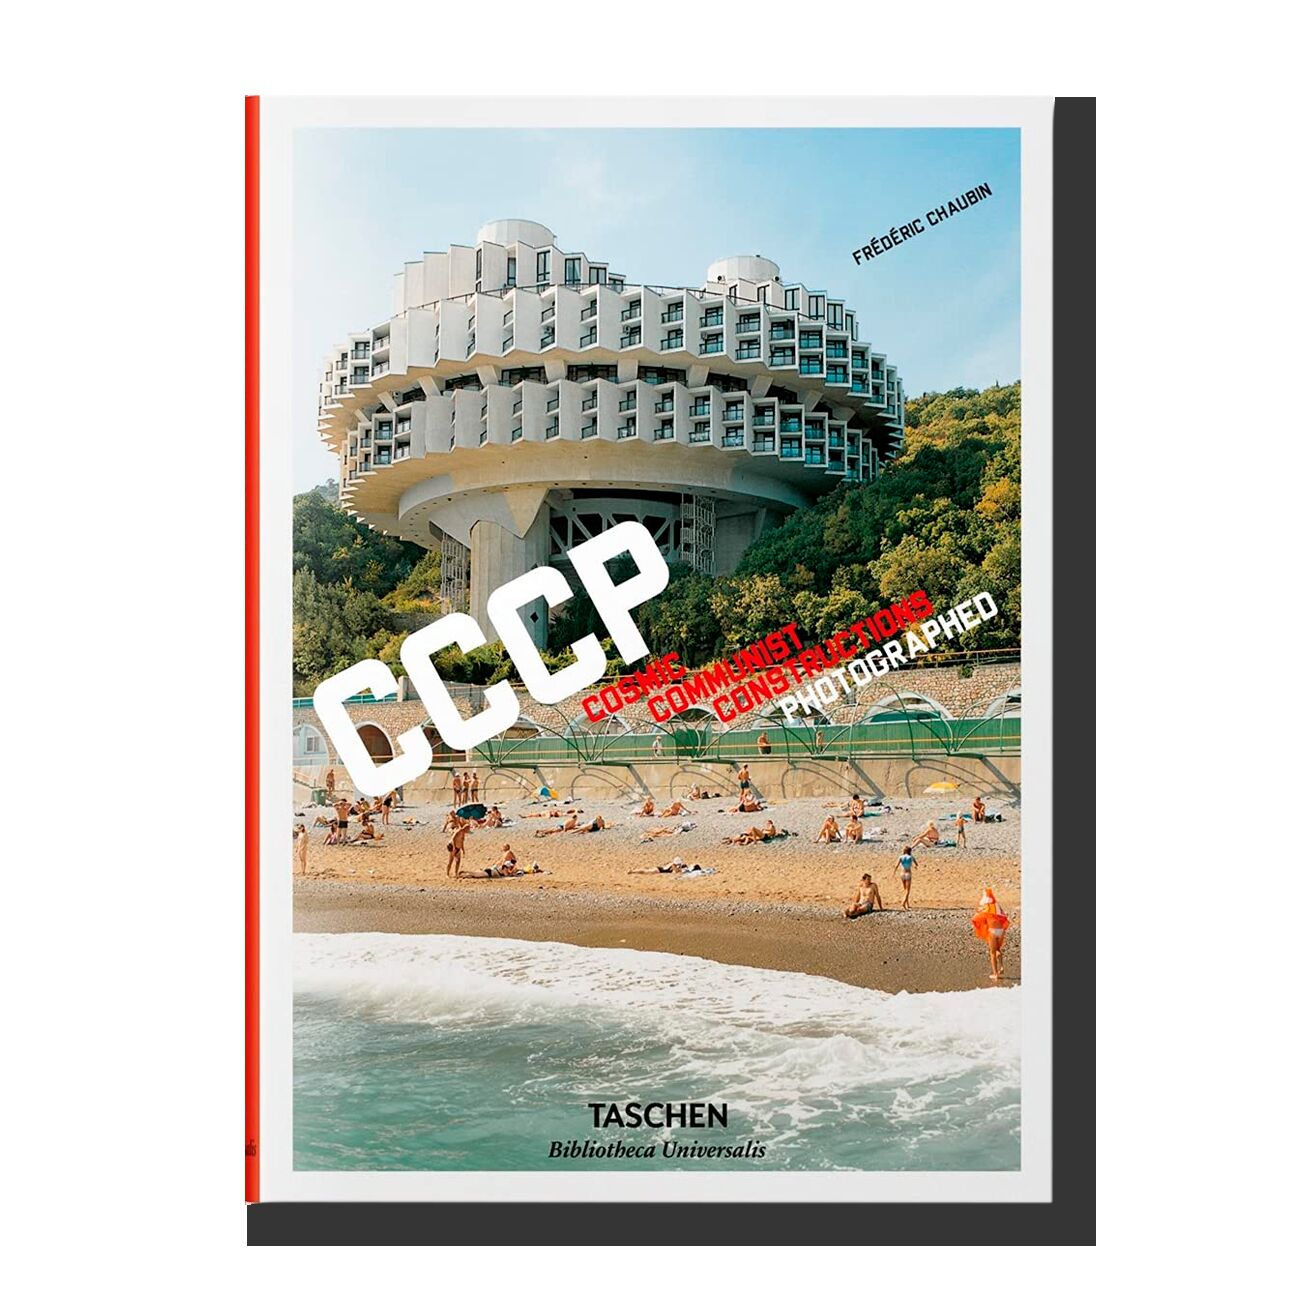 CCCP: Cosmic Communist Constructions Photographed 